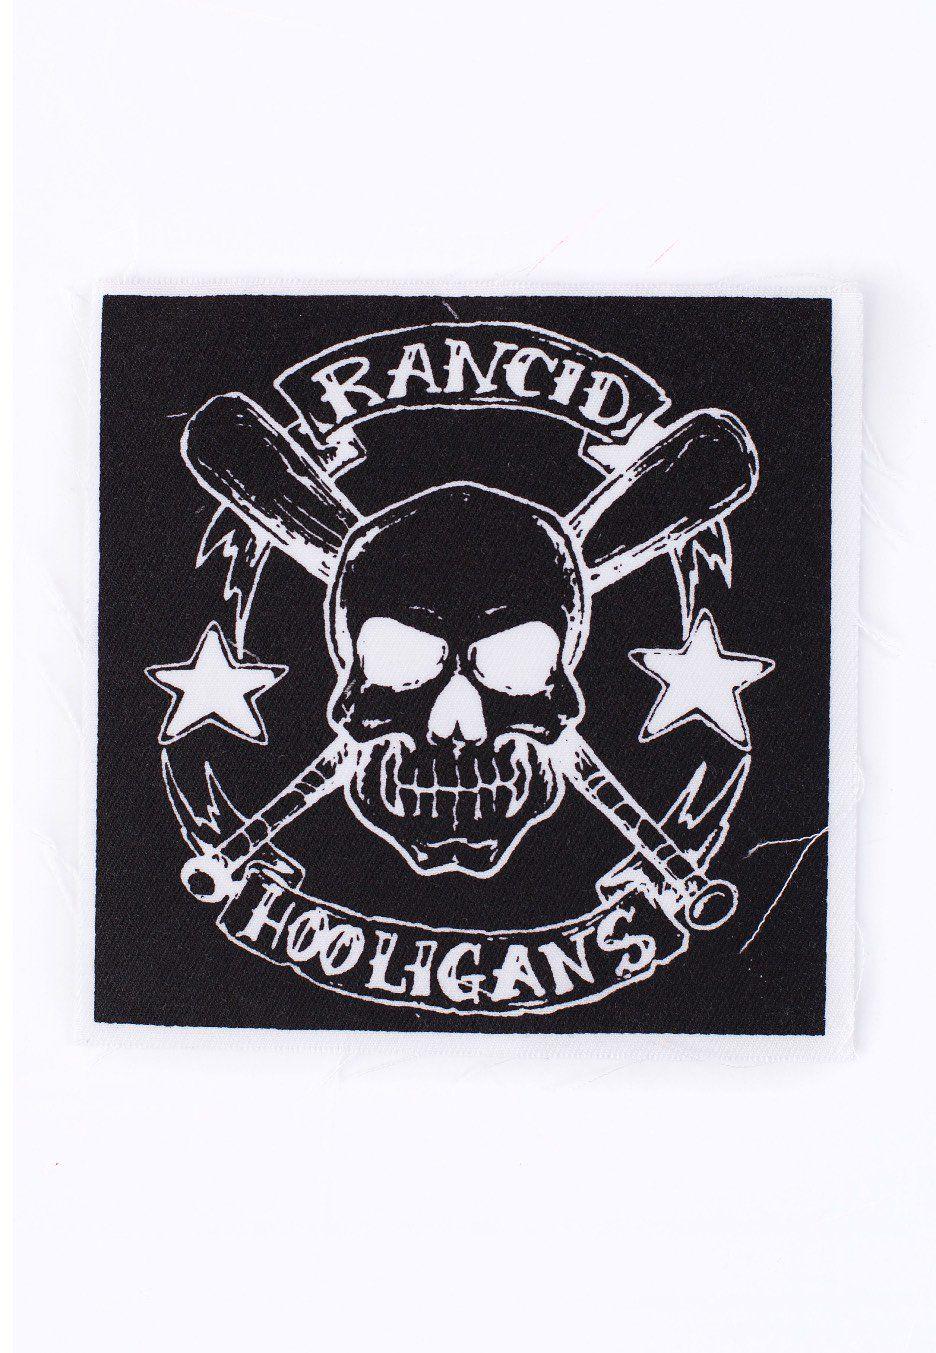 Rancid Logo - Rancid - Hooligans - Patch